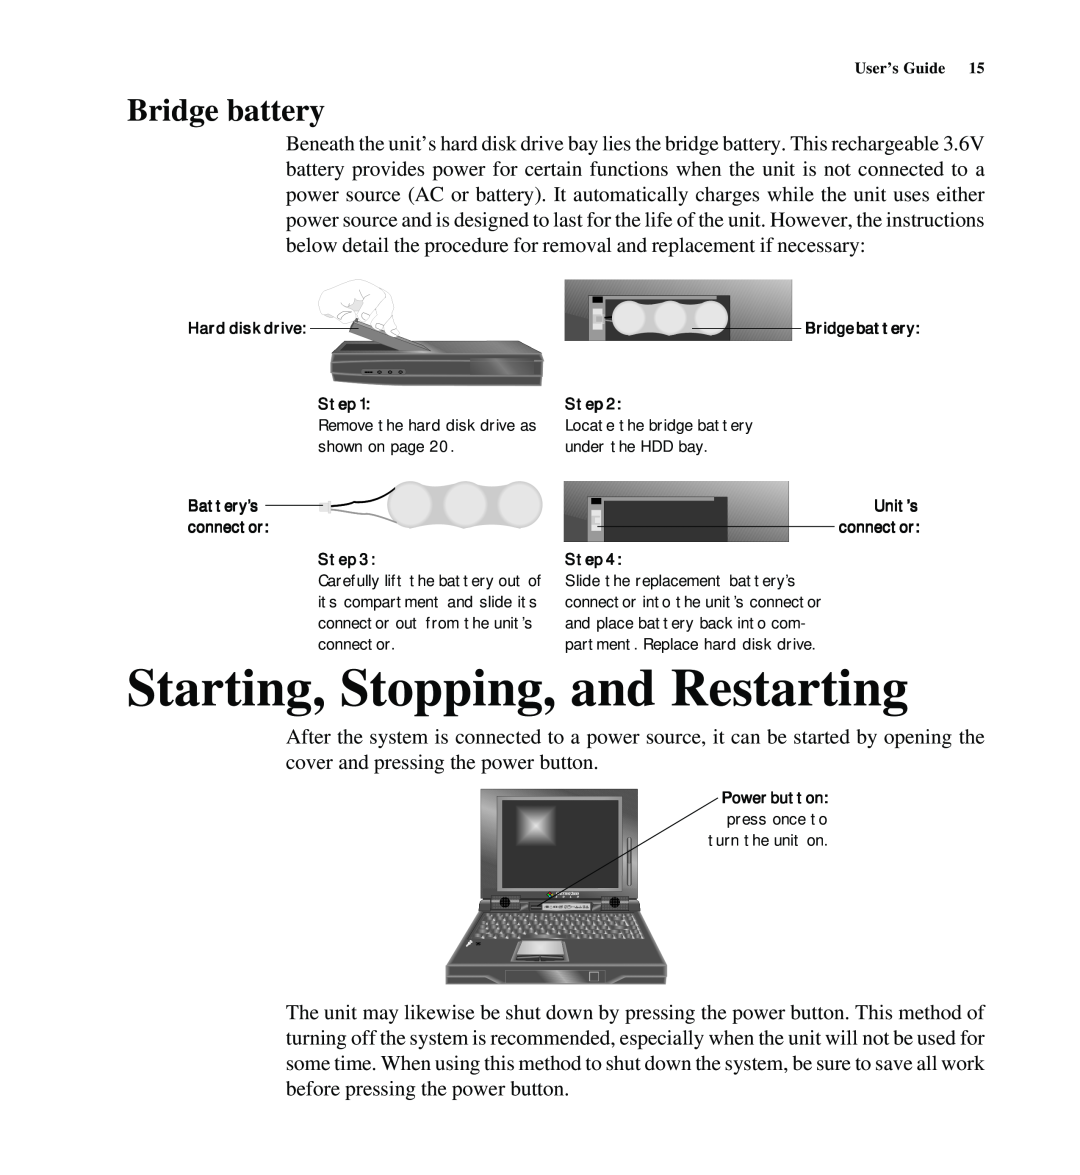 Gateway SYSMAN017AAUS manual Starting, Stopping, and Restarting, Bridge battery 